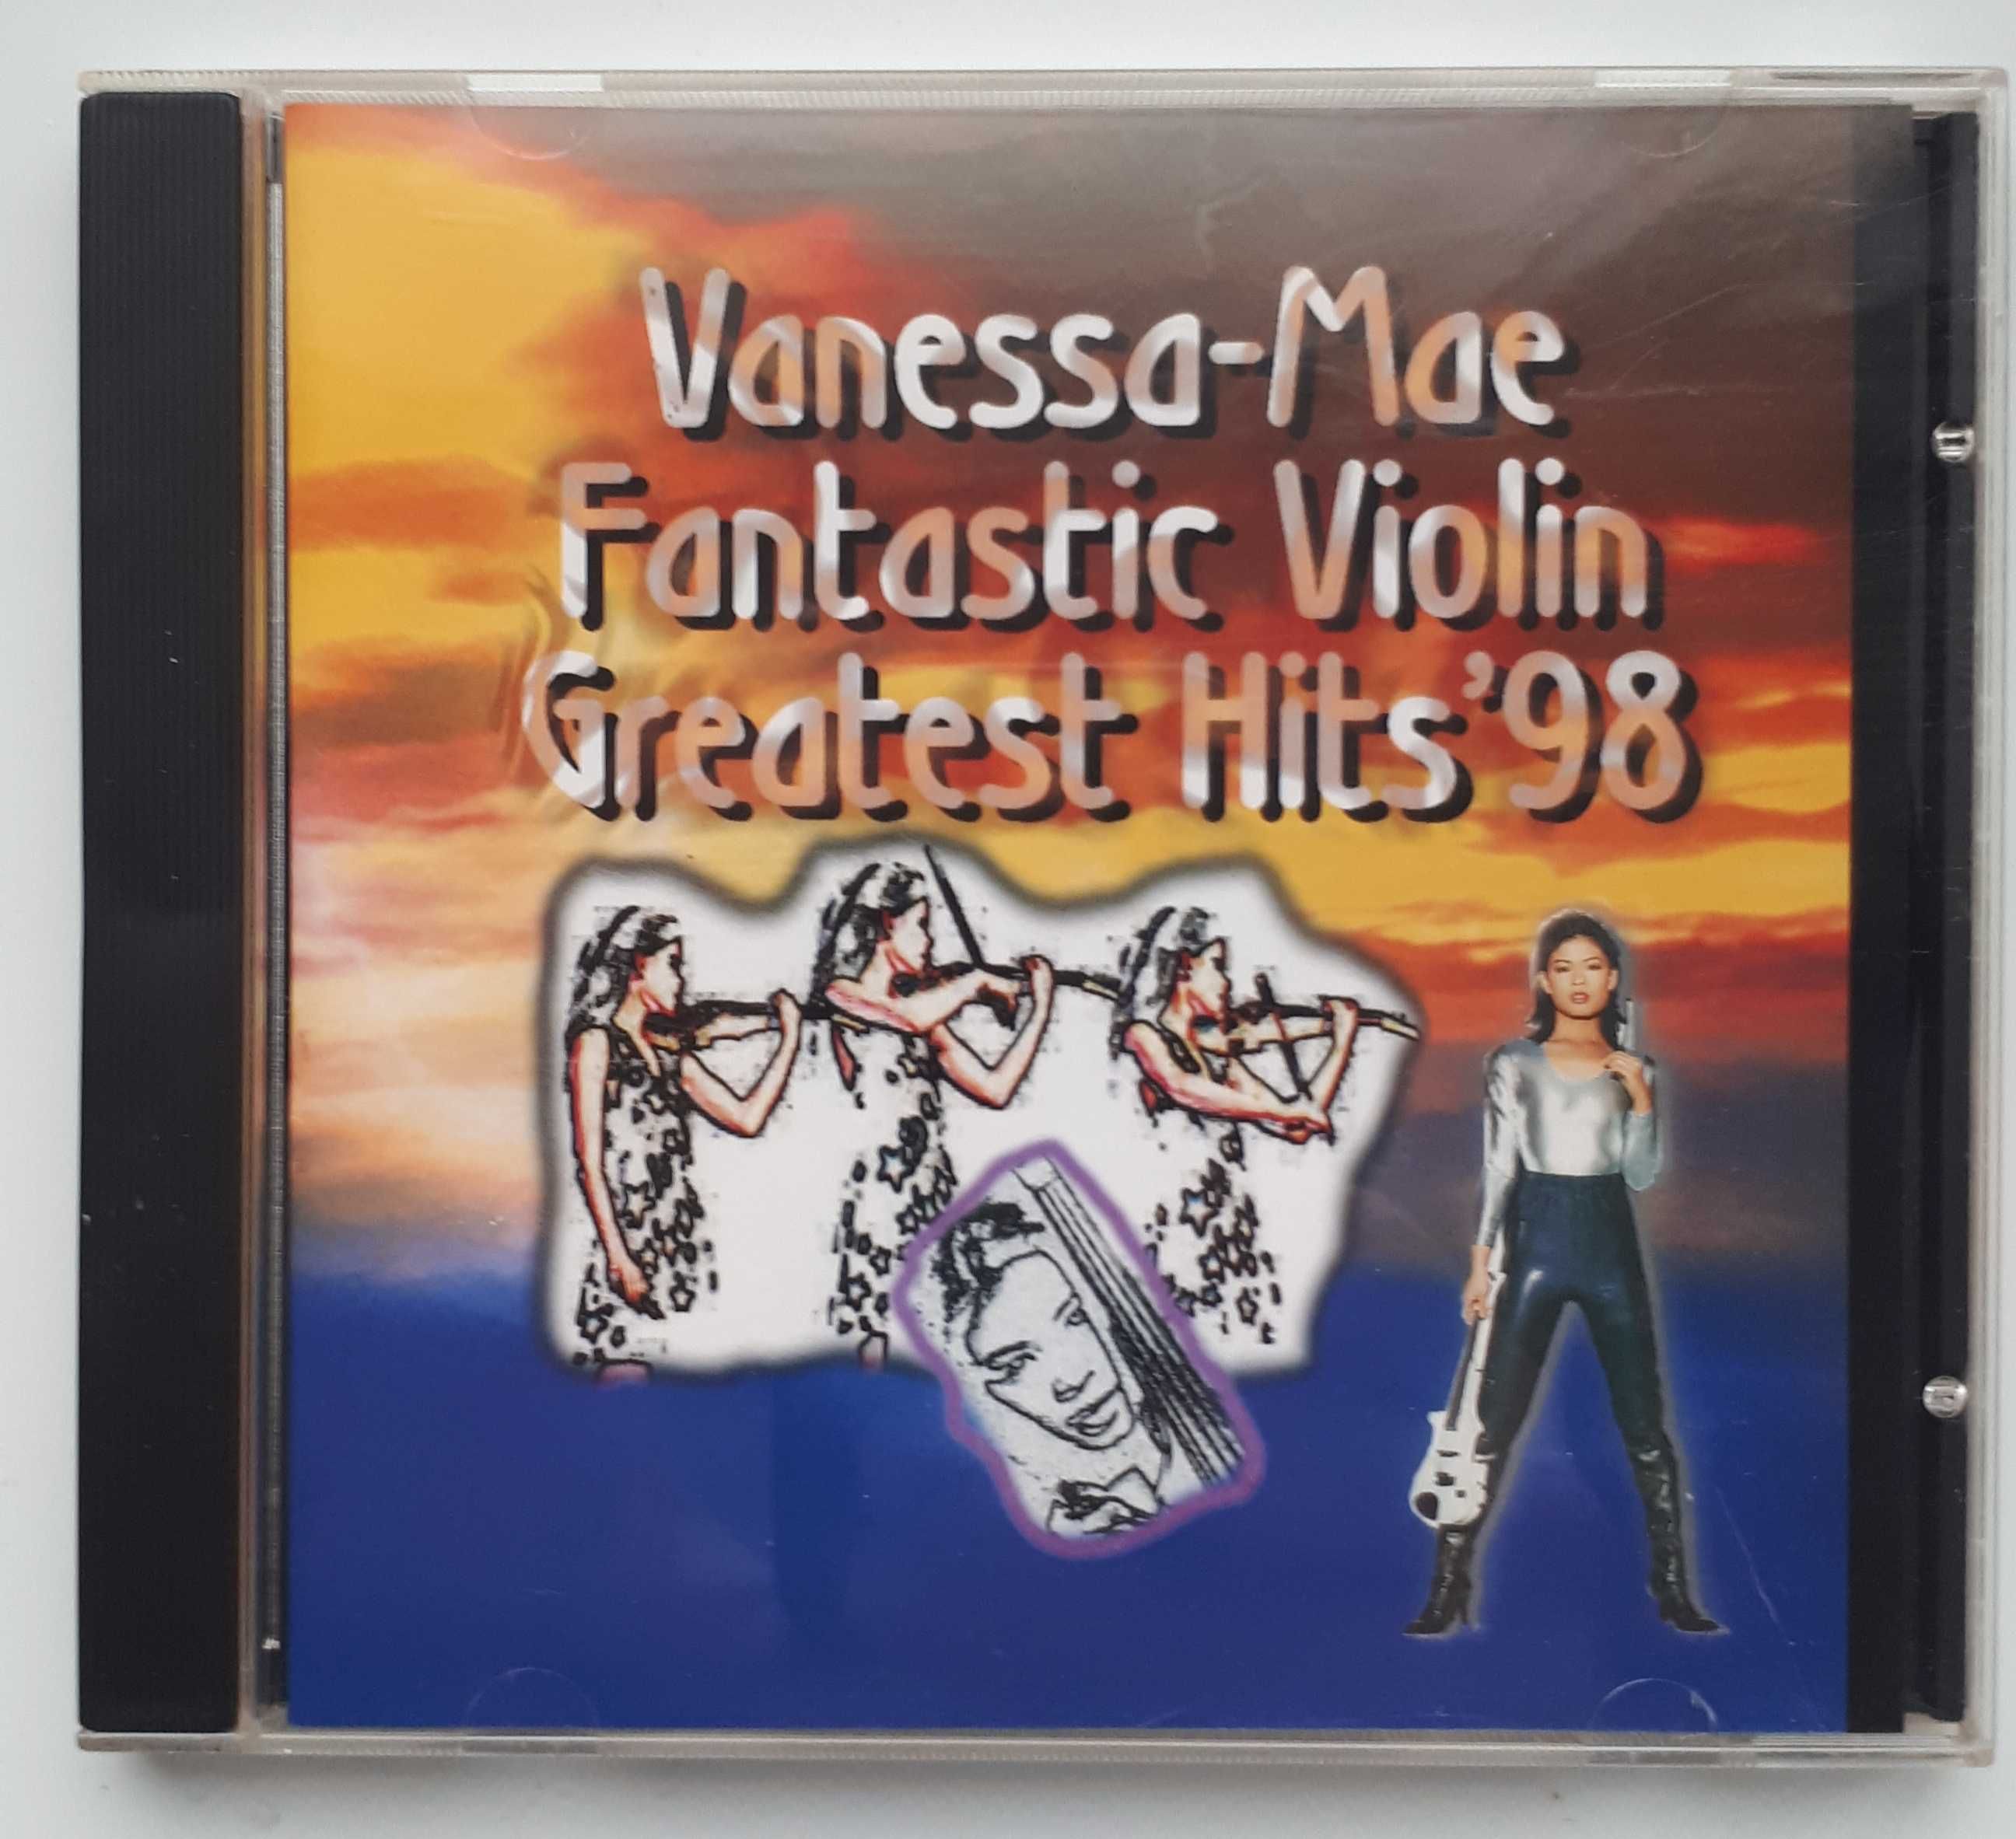 Vanessa-Mae – Fantastic Violin. Greatest Hits 98.